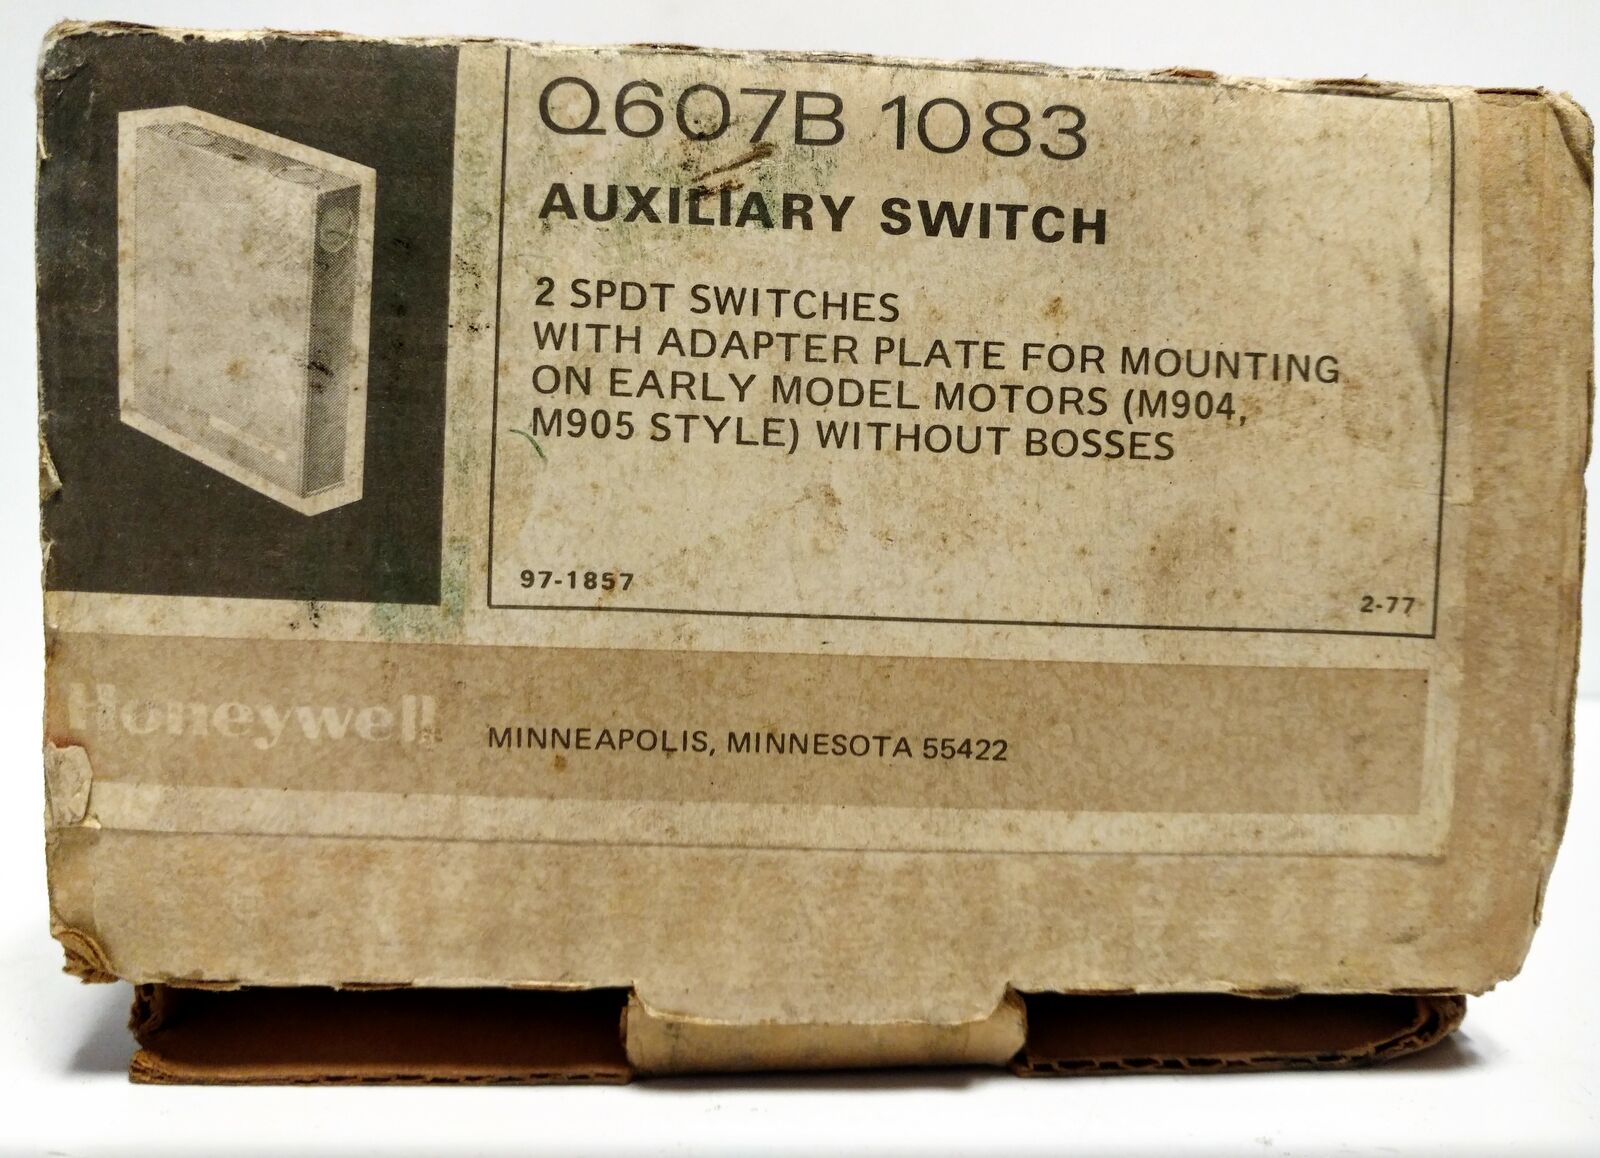 Honeywell Q607B-1083 Auxiliary Switch